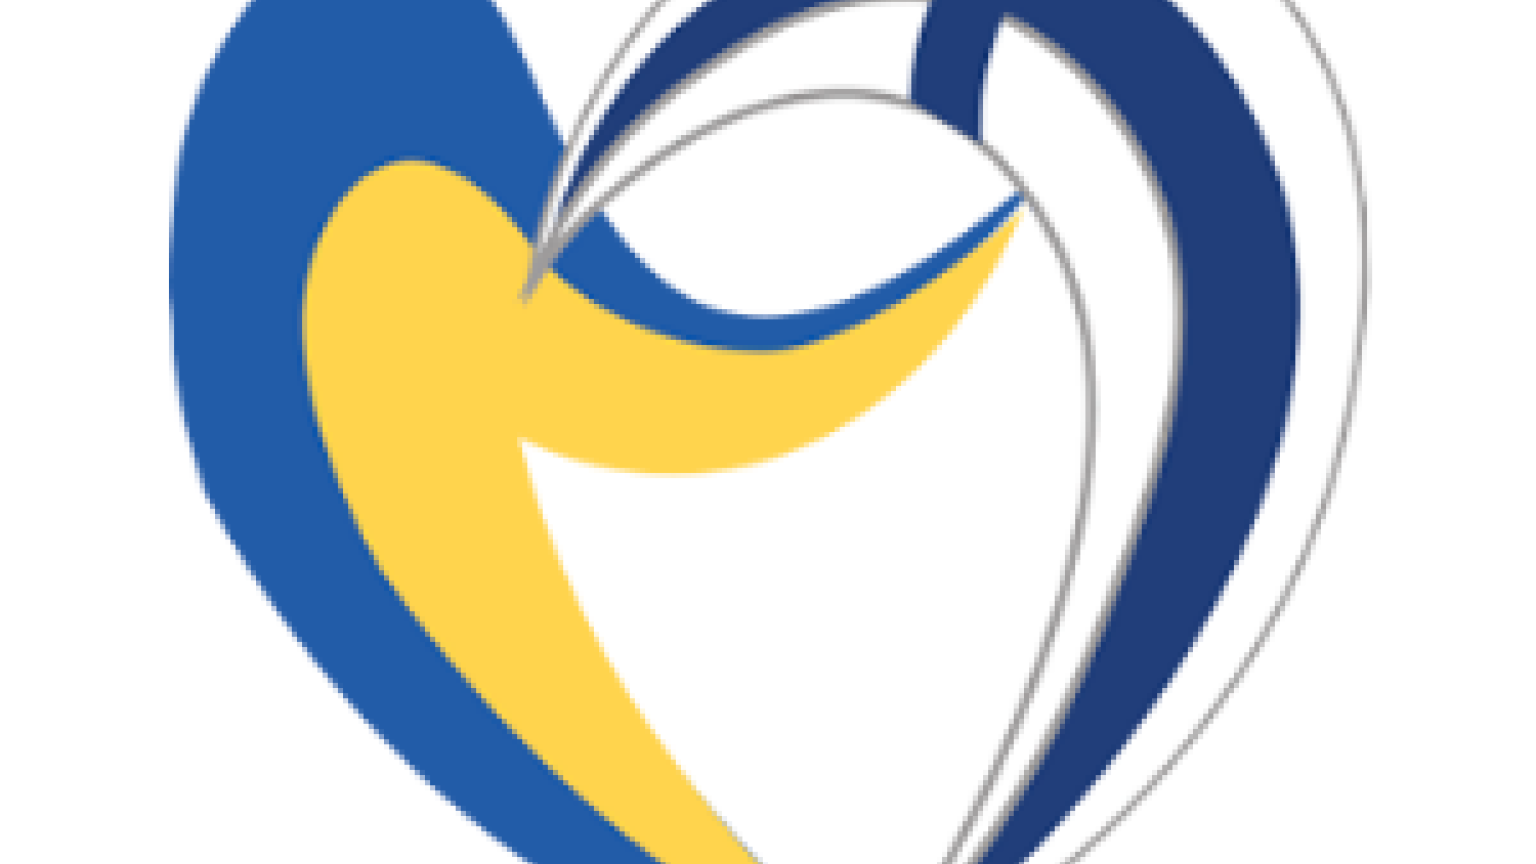 The Ukrainian Association in Finland's Logo.